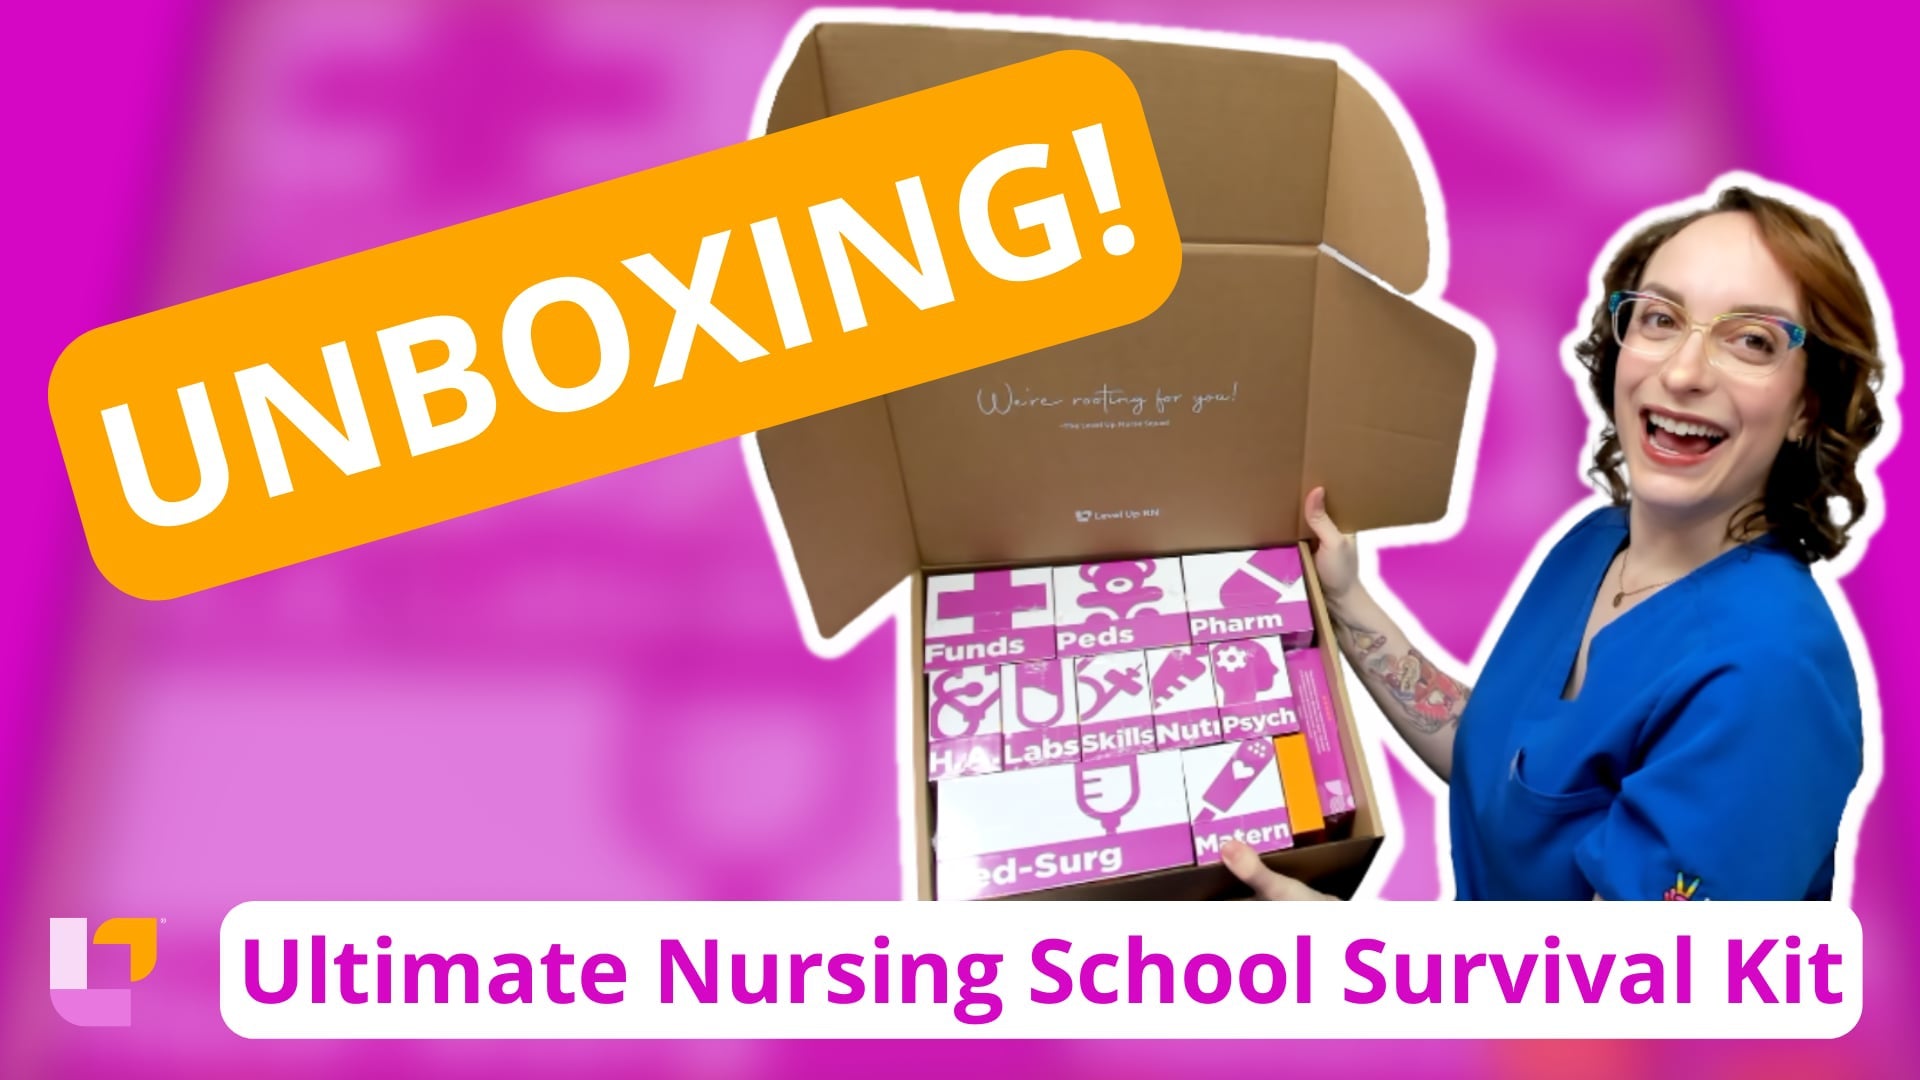 Unboxing the Nursing School Survival Kit - LevelUpRN